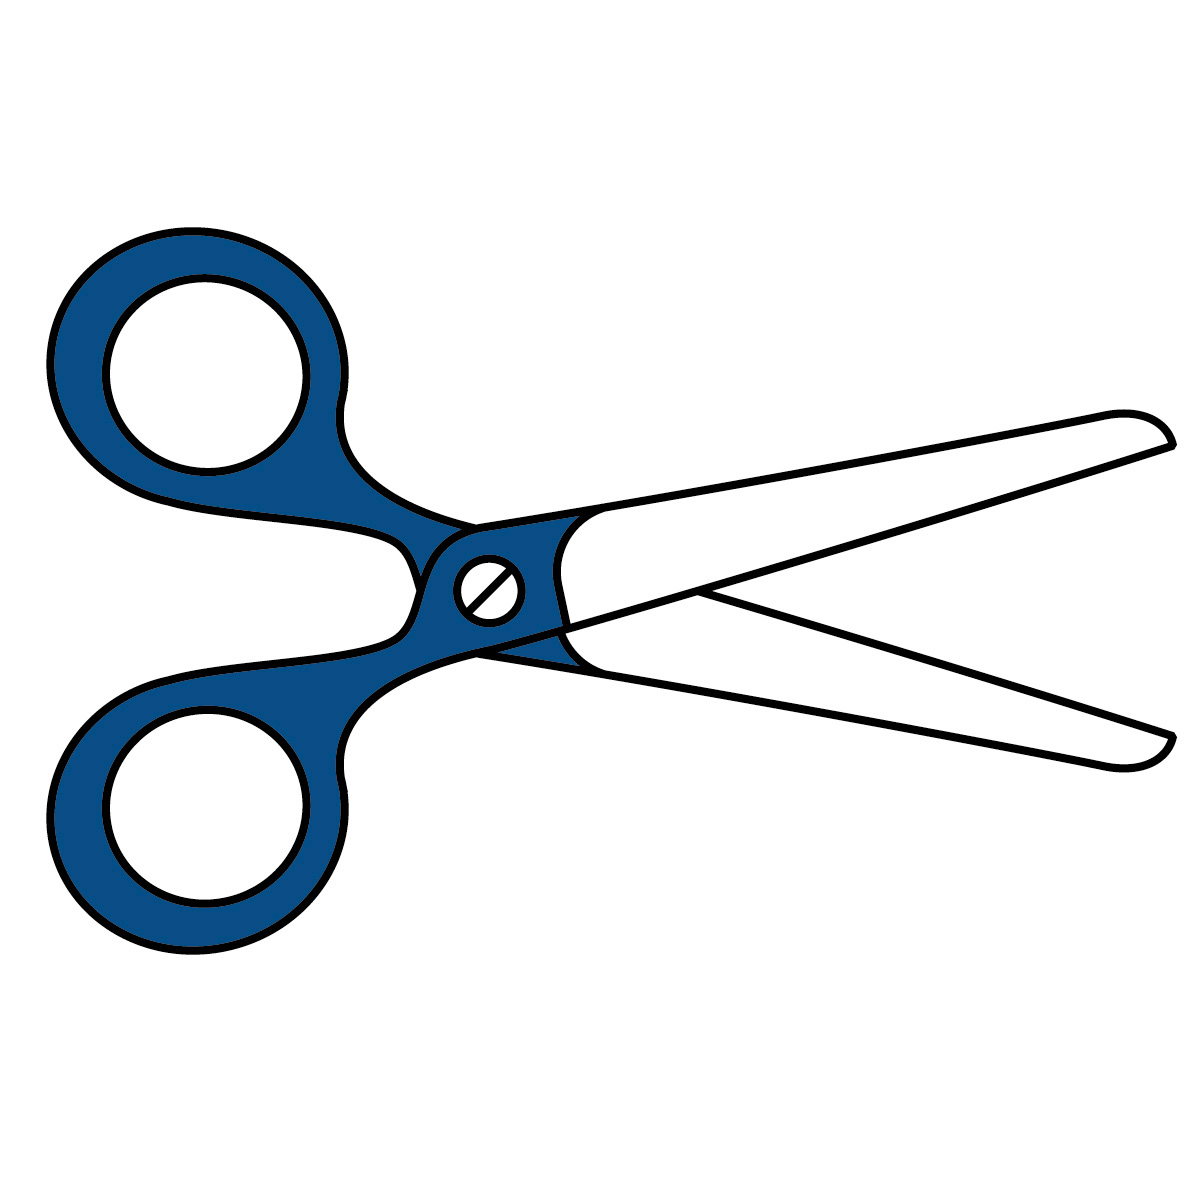 Scissors Clip Art Scissors Clip Art 5 Jpg